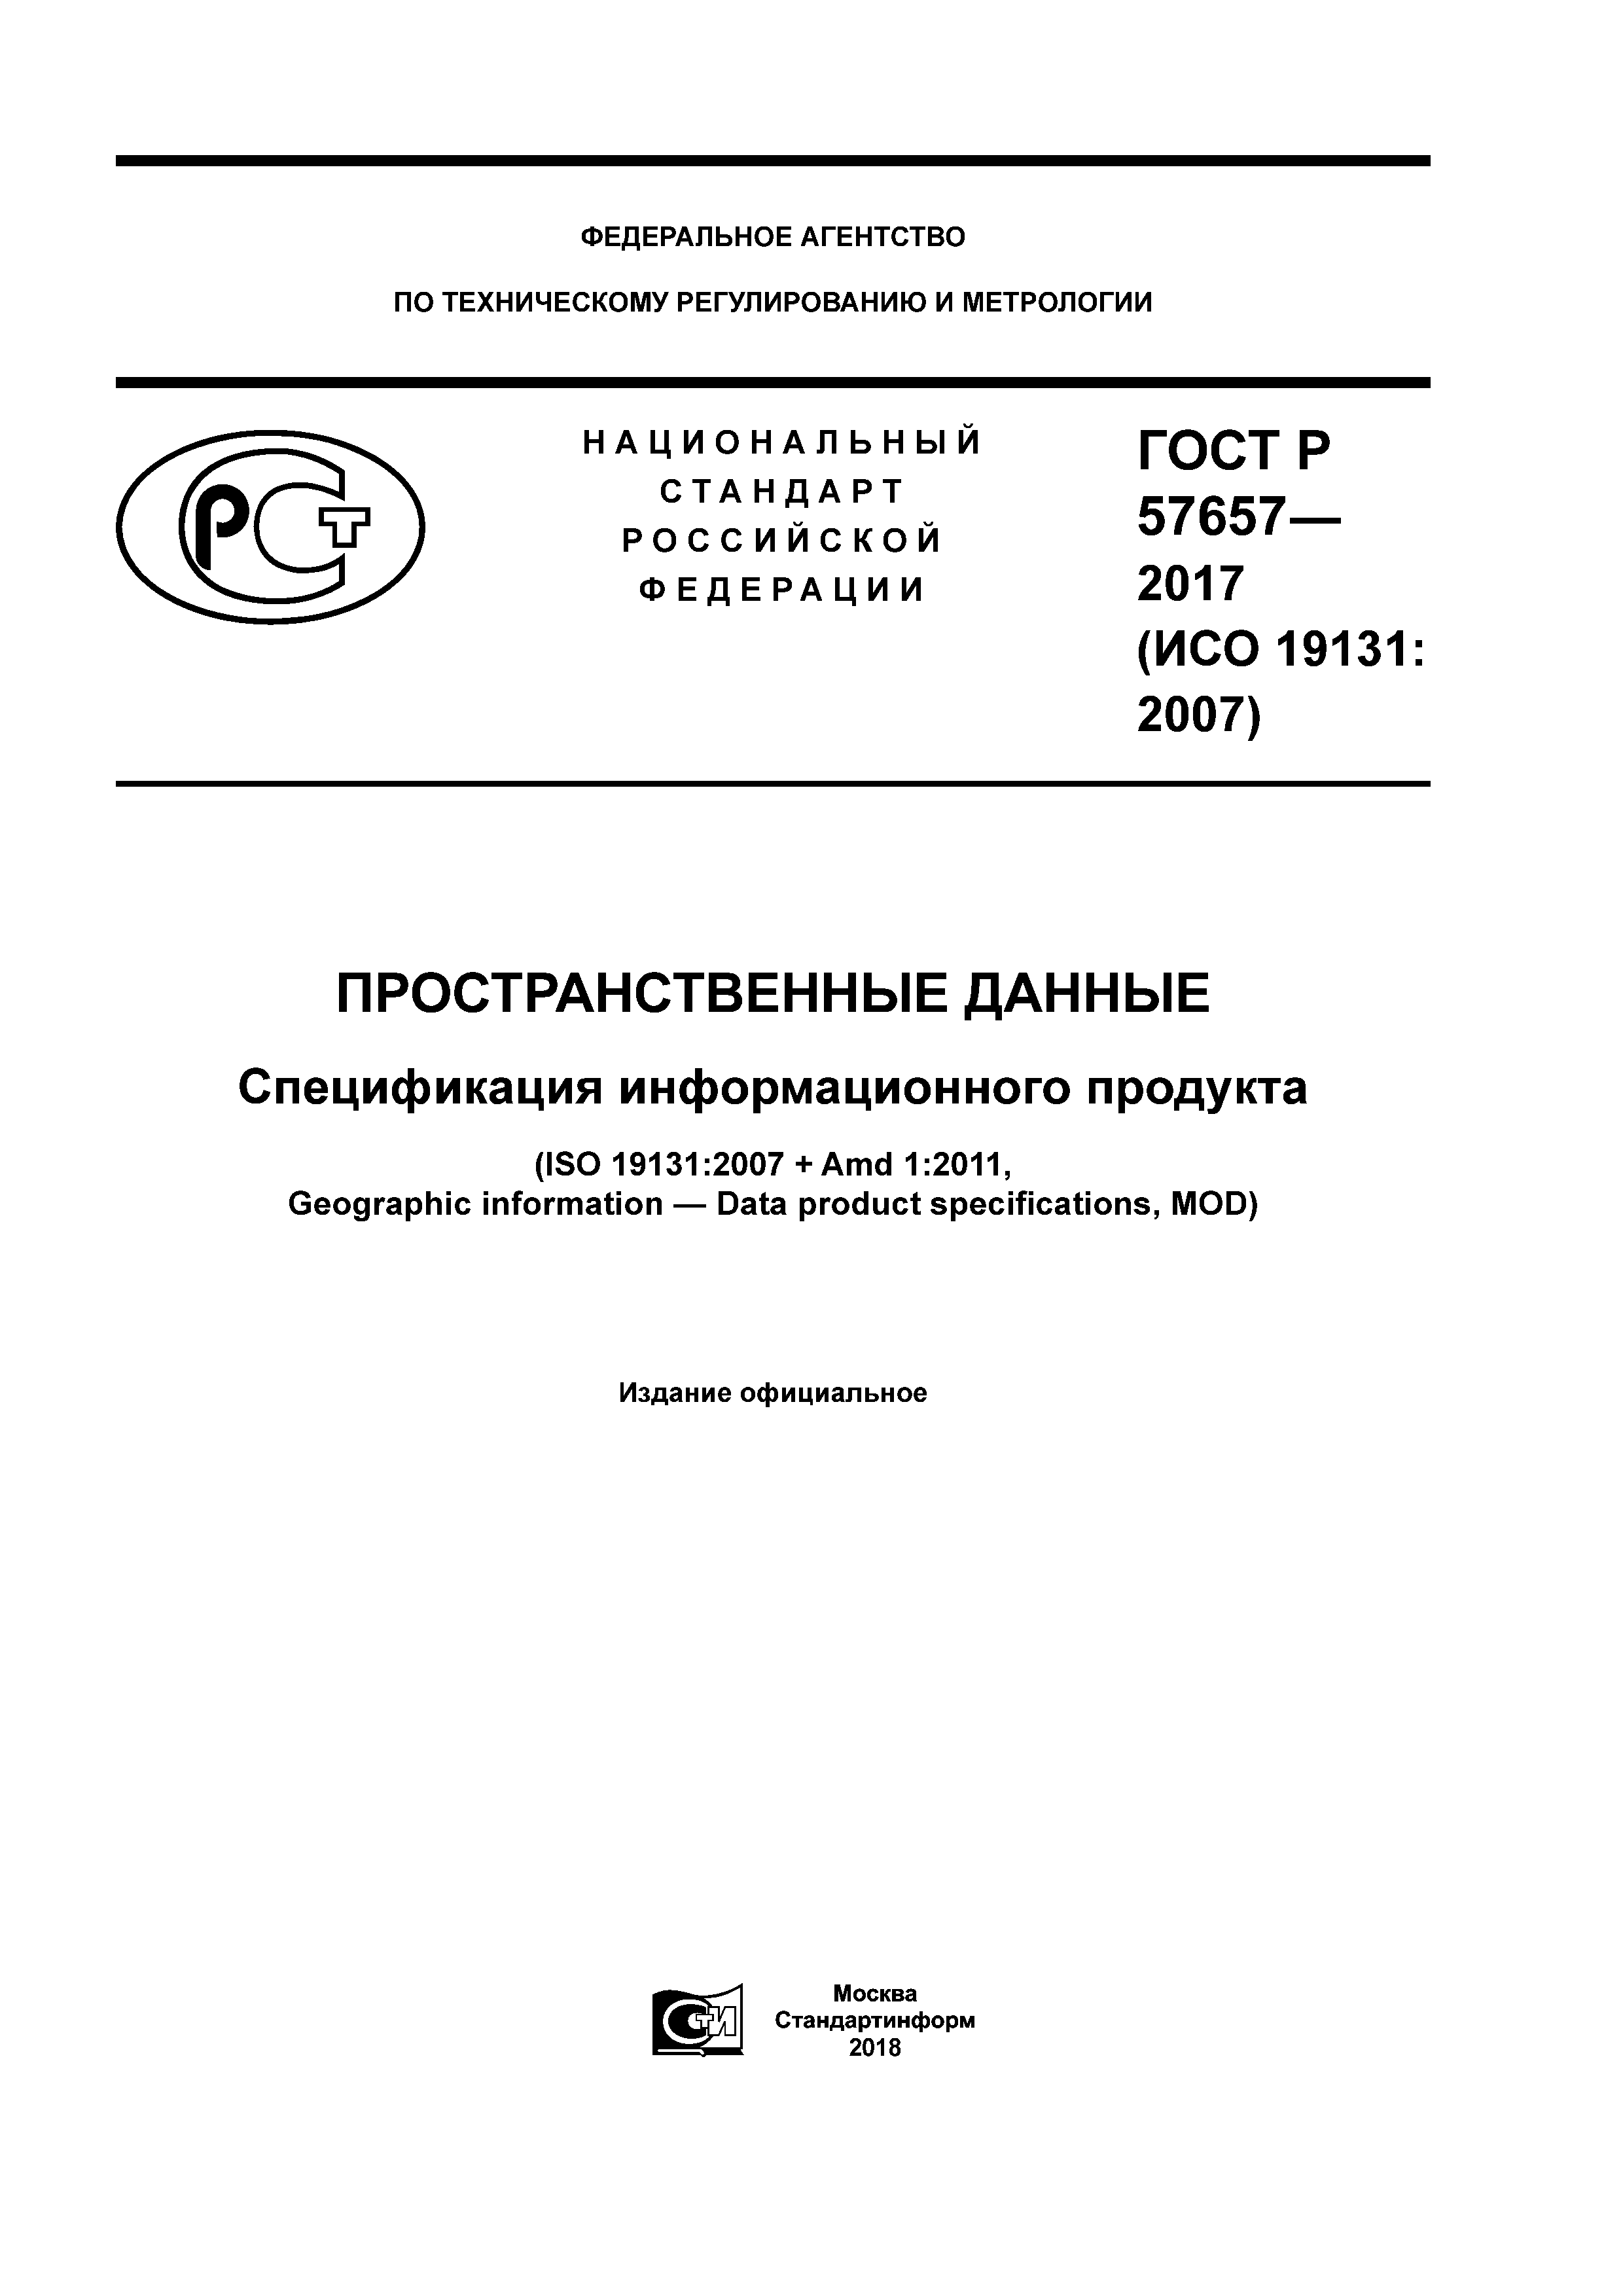 ГОСТ Р 57657-2017